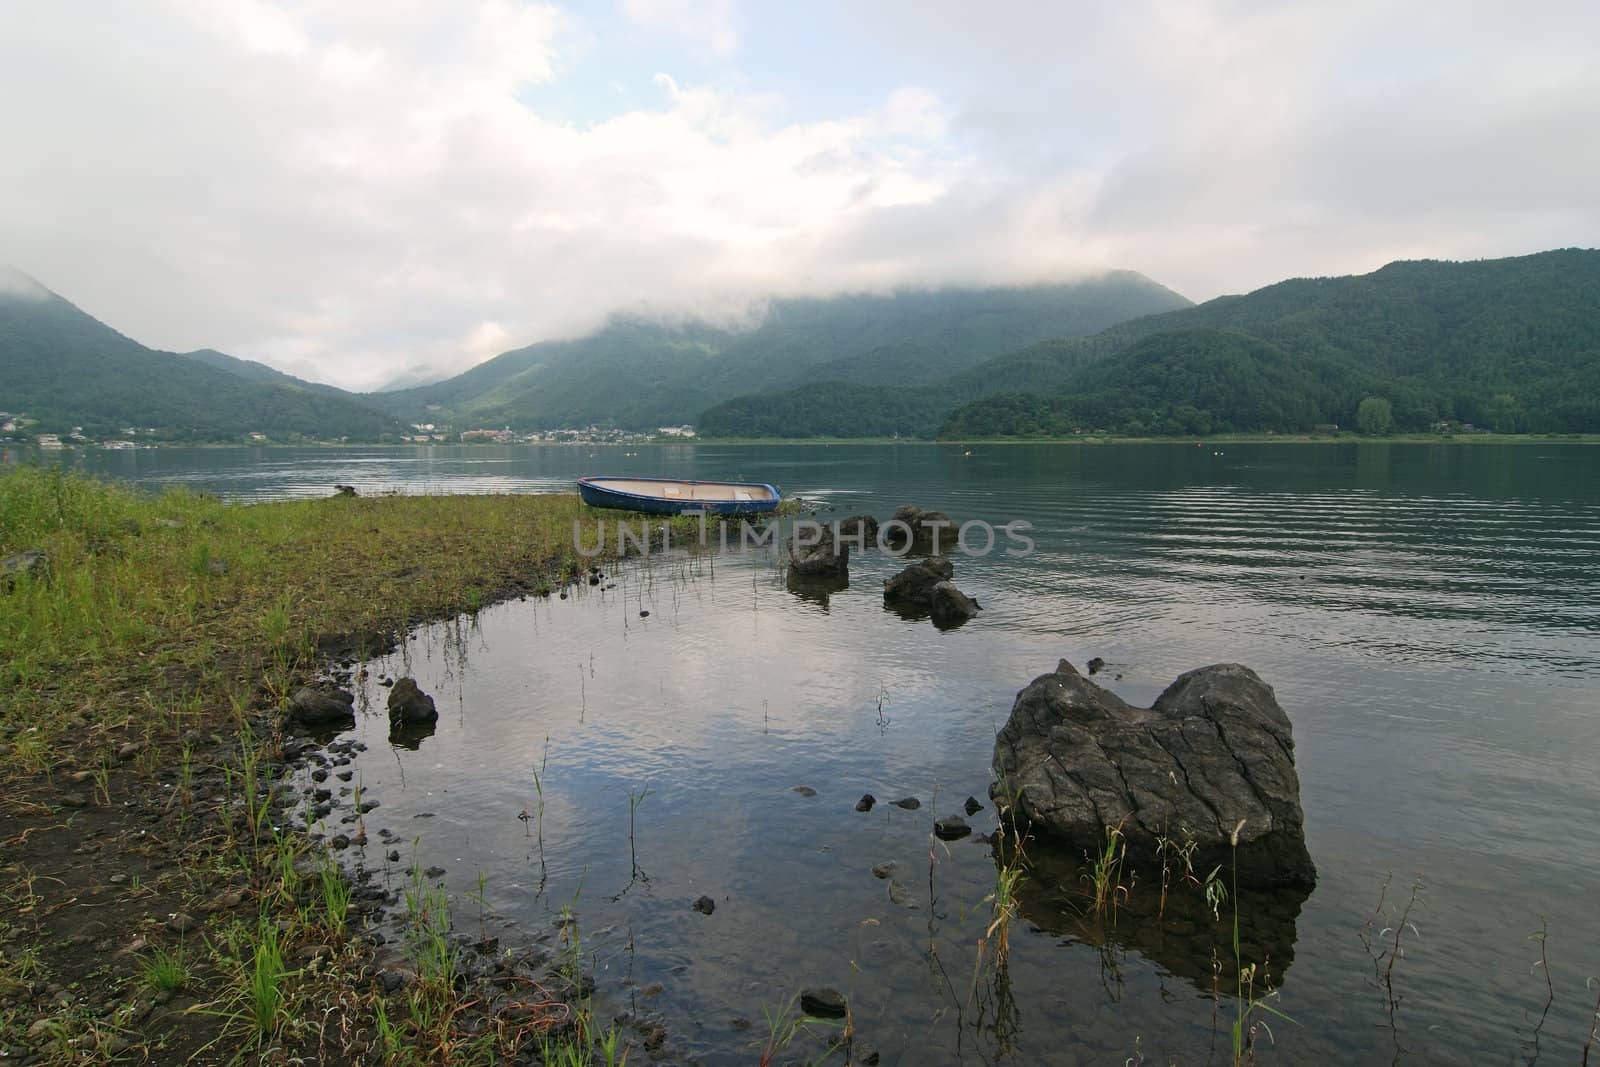 mountain landscape with lake, boulders in water and blue boat backward, Lake Kawaguchi, Japan